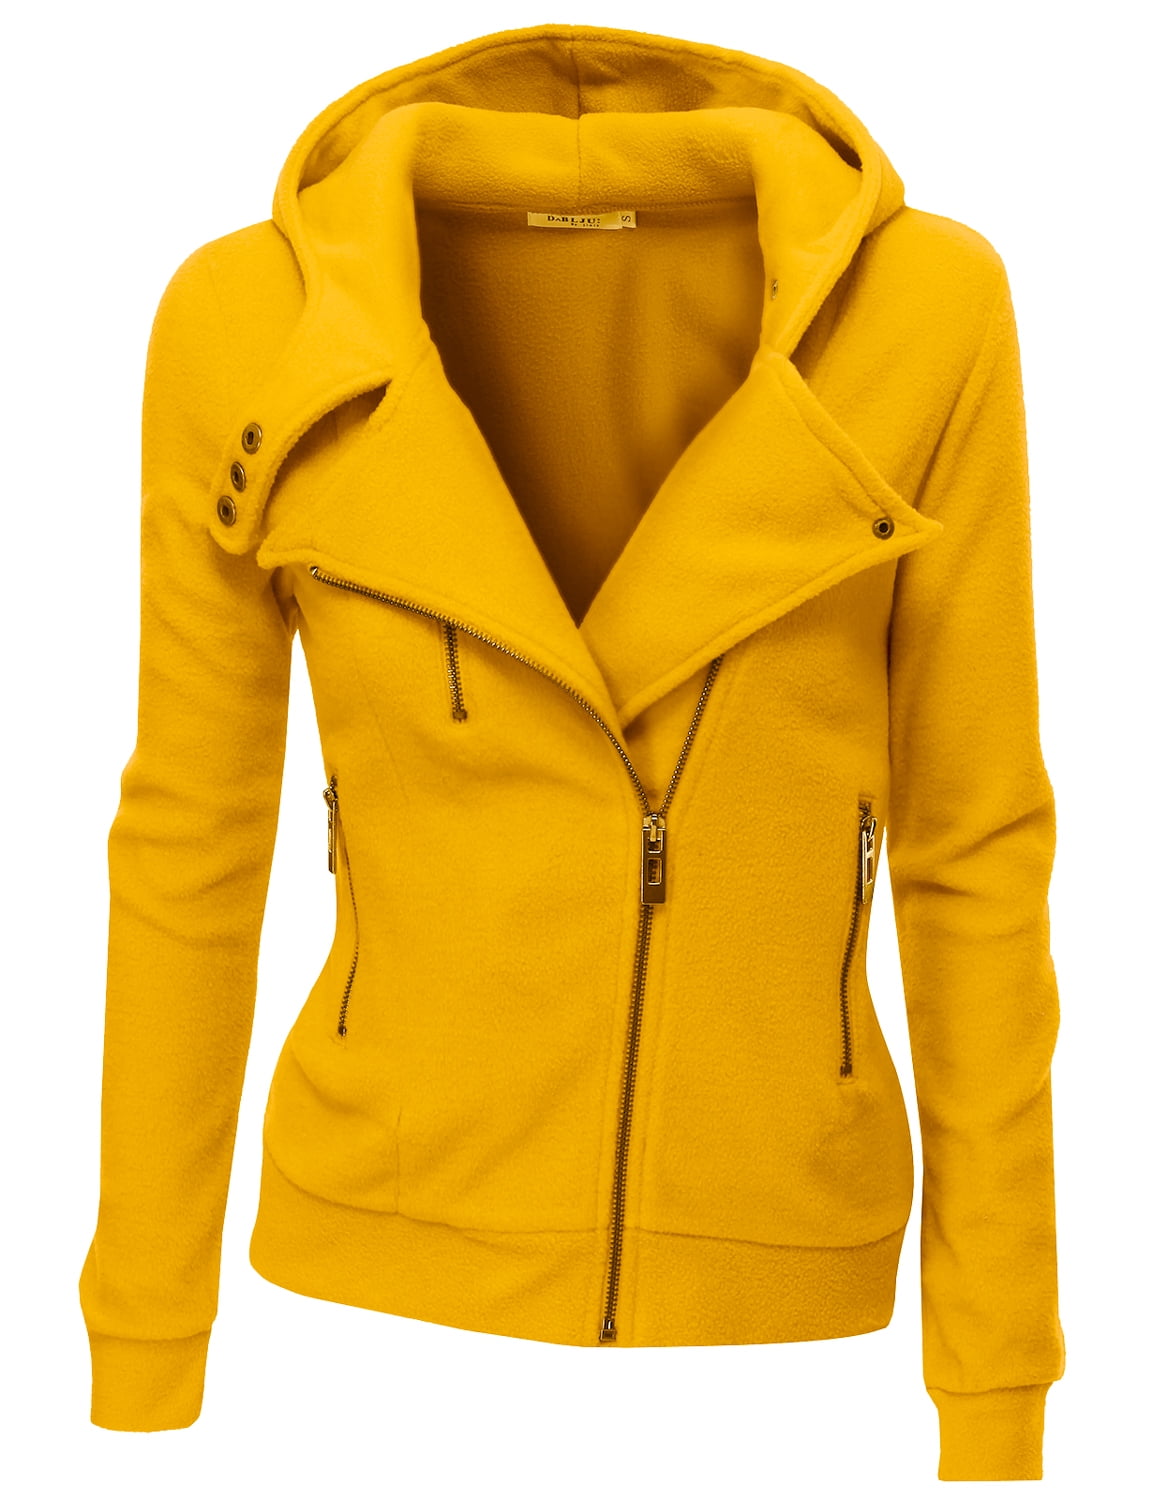 Doublju Fleece Zip-Up High Neck Jacket for Women with Plus Size